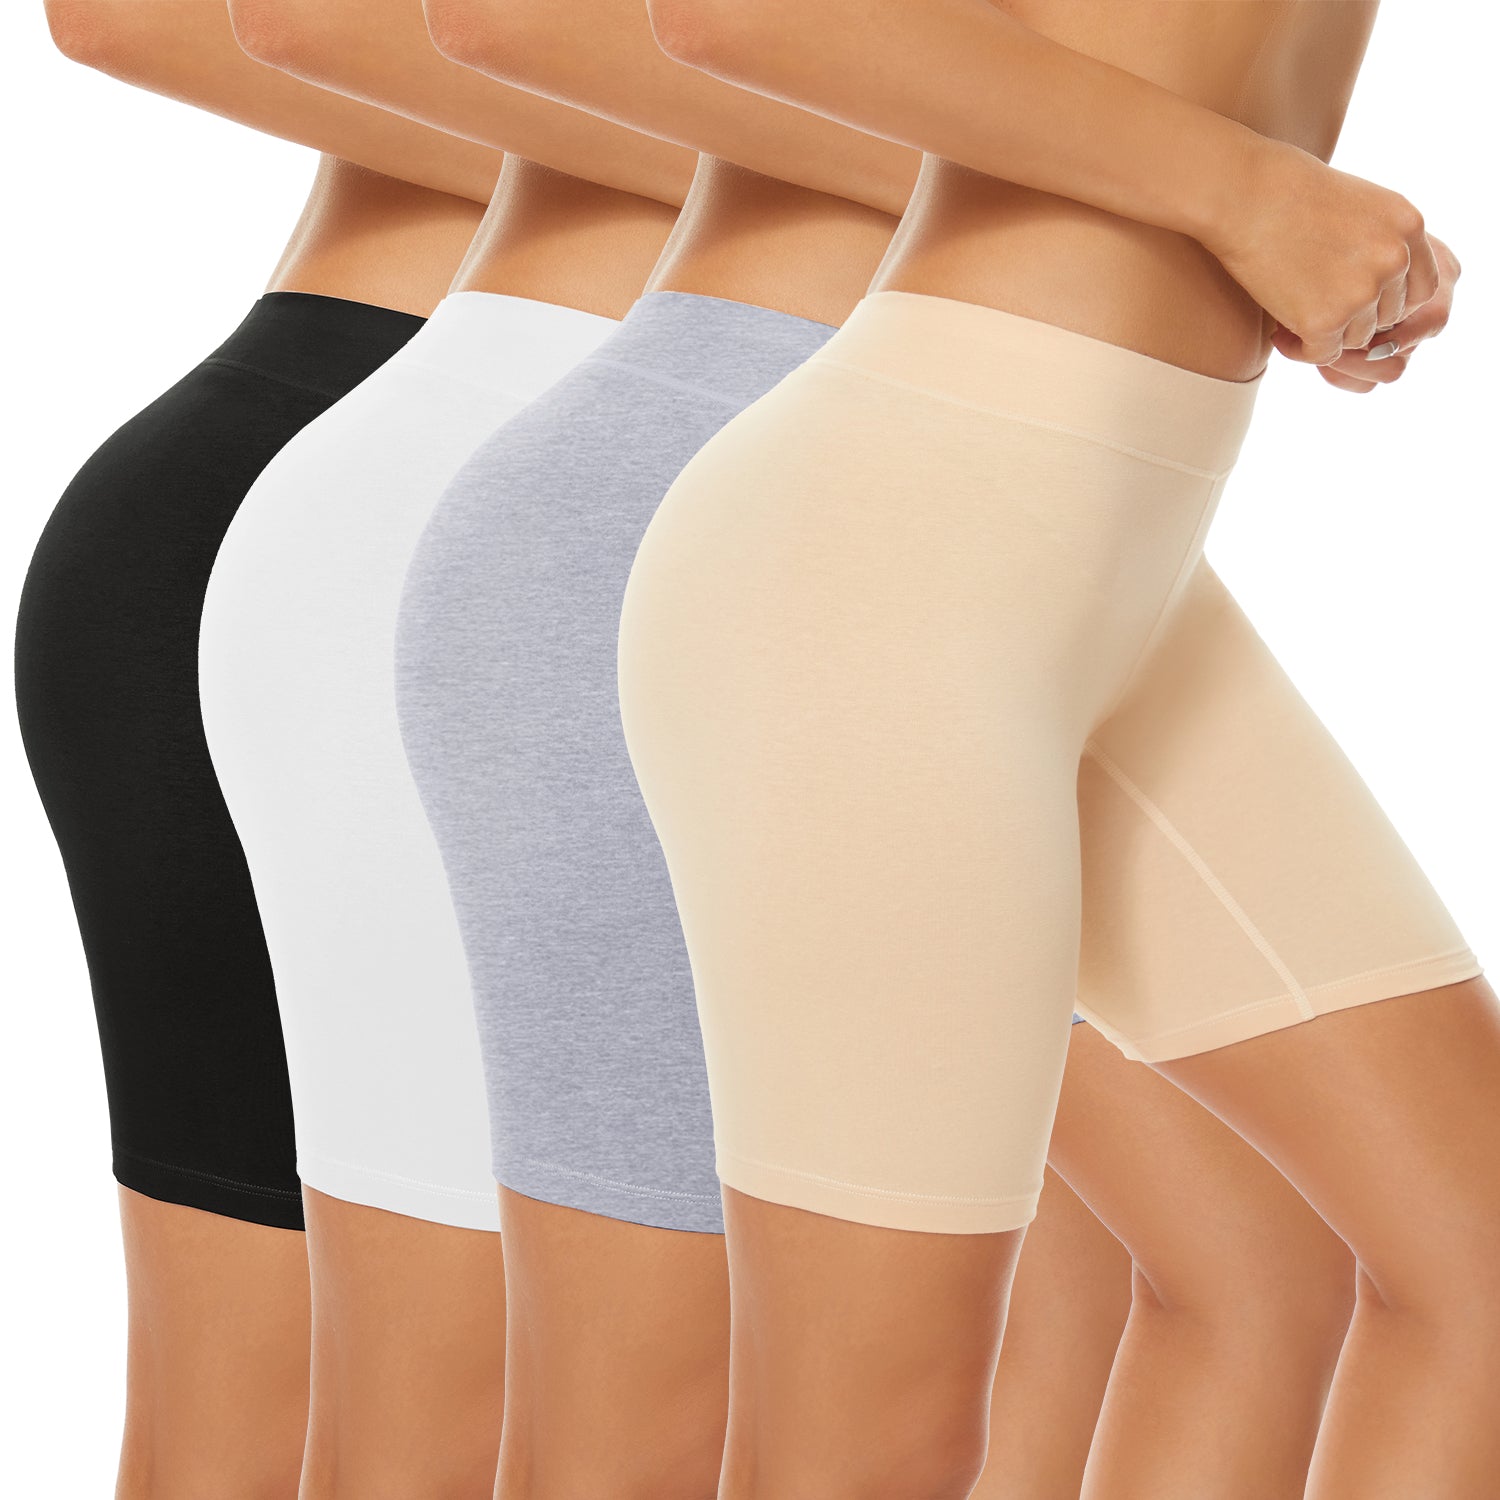 POKARLA 4 Pack Women's Cotton Underwear Boxer Shorts Anti Chafing Bike  Shorts Boyshorts Panties Regular & Plus Size(4X-Large), Multicolor03-4pack,  4XL price in Saudi Arabia,  Saudi Arabia